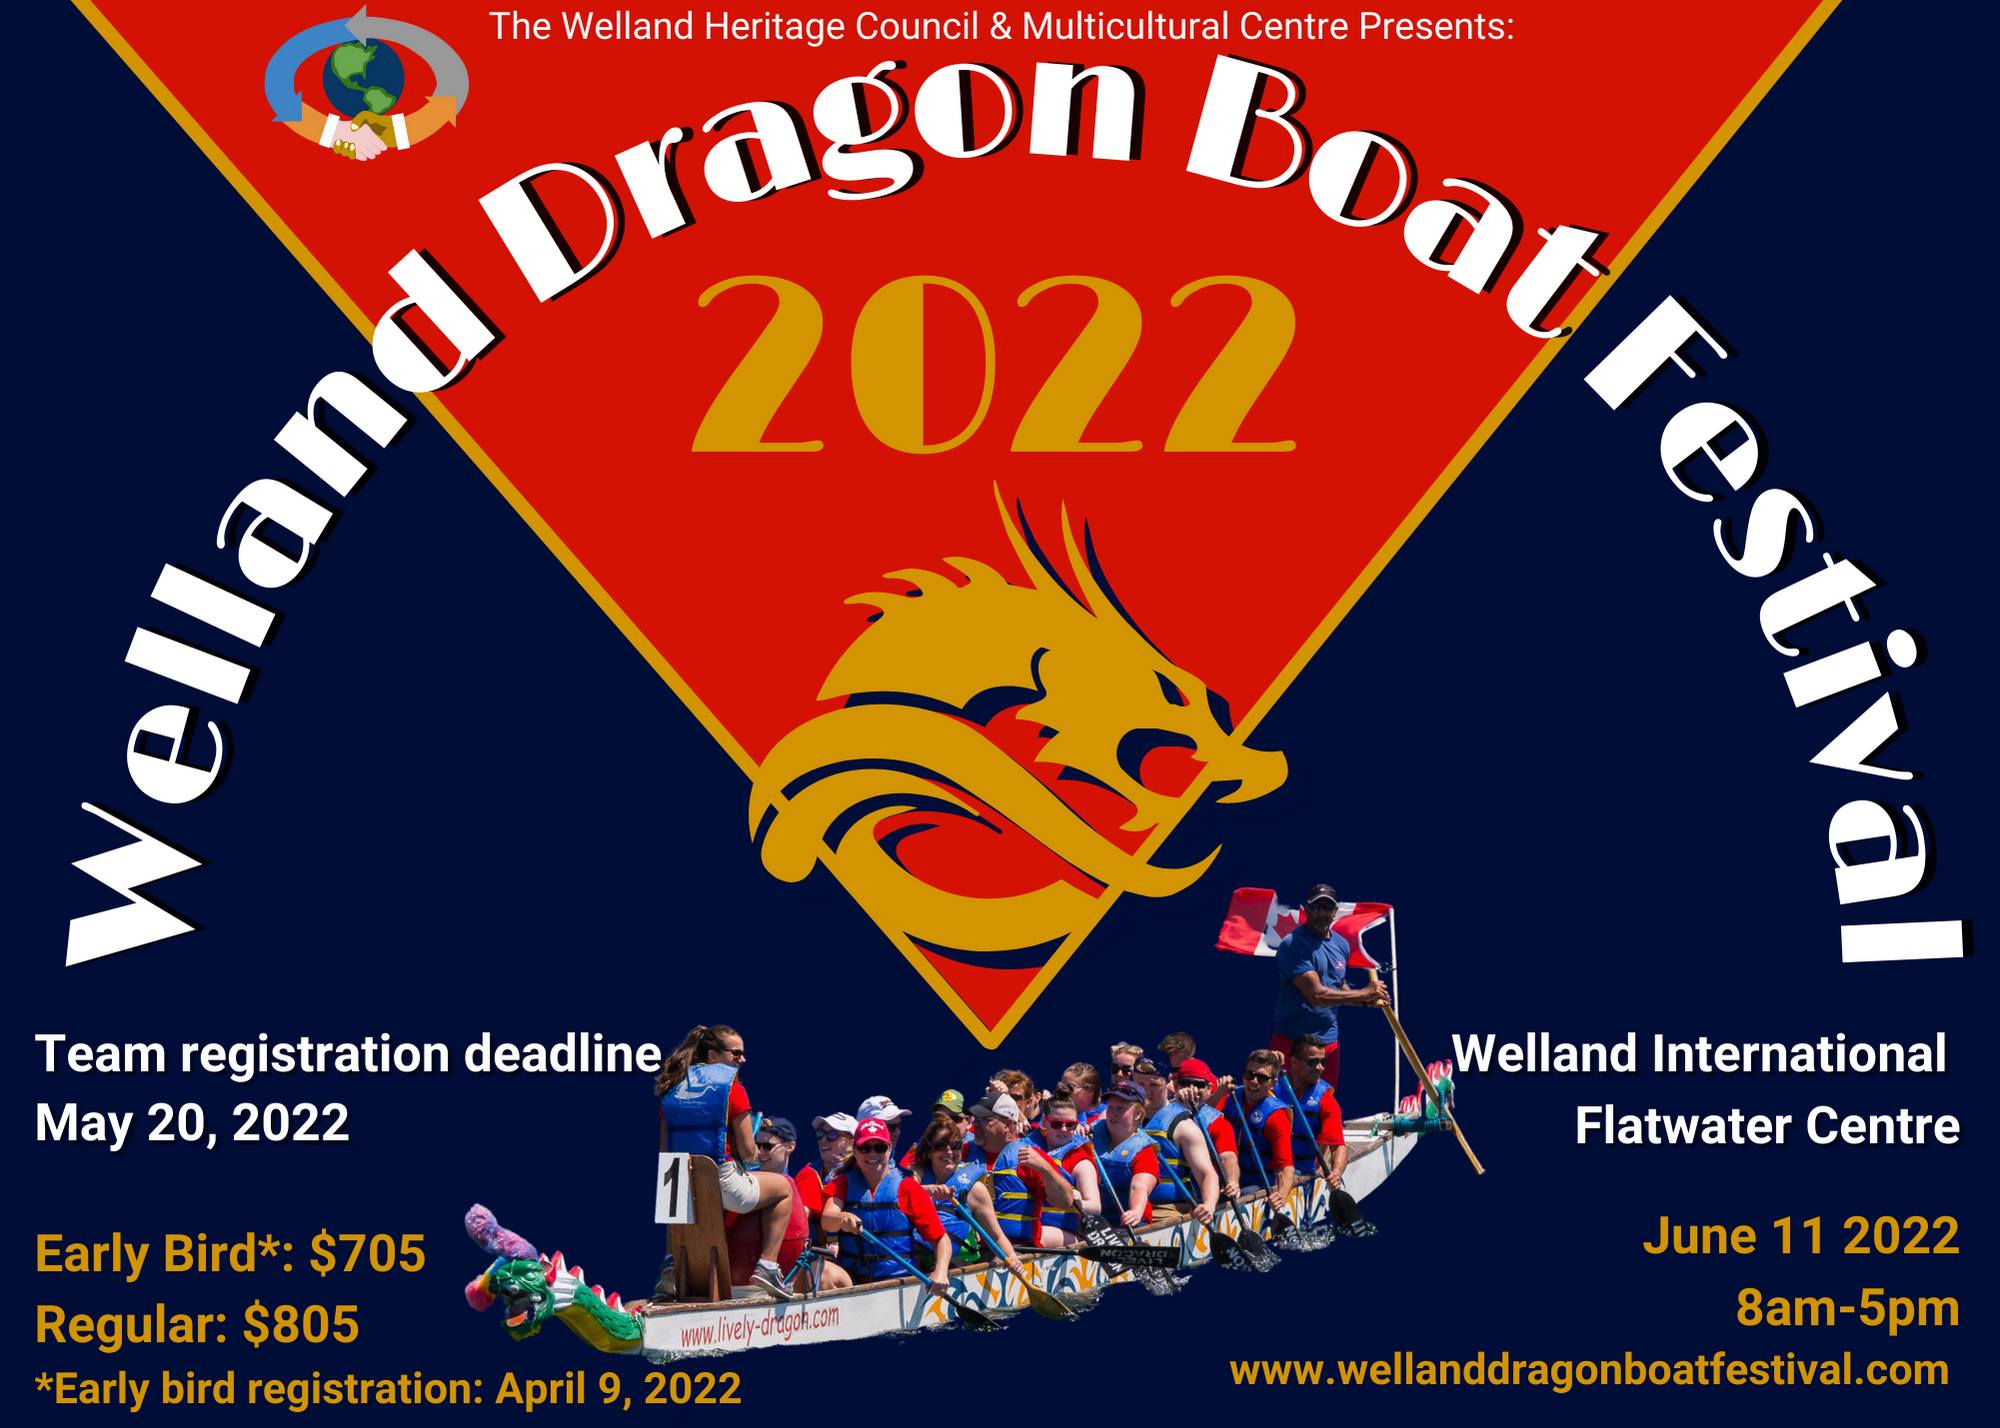 Welland Dragon Boat Festival is Back!